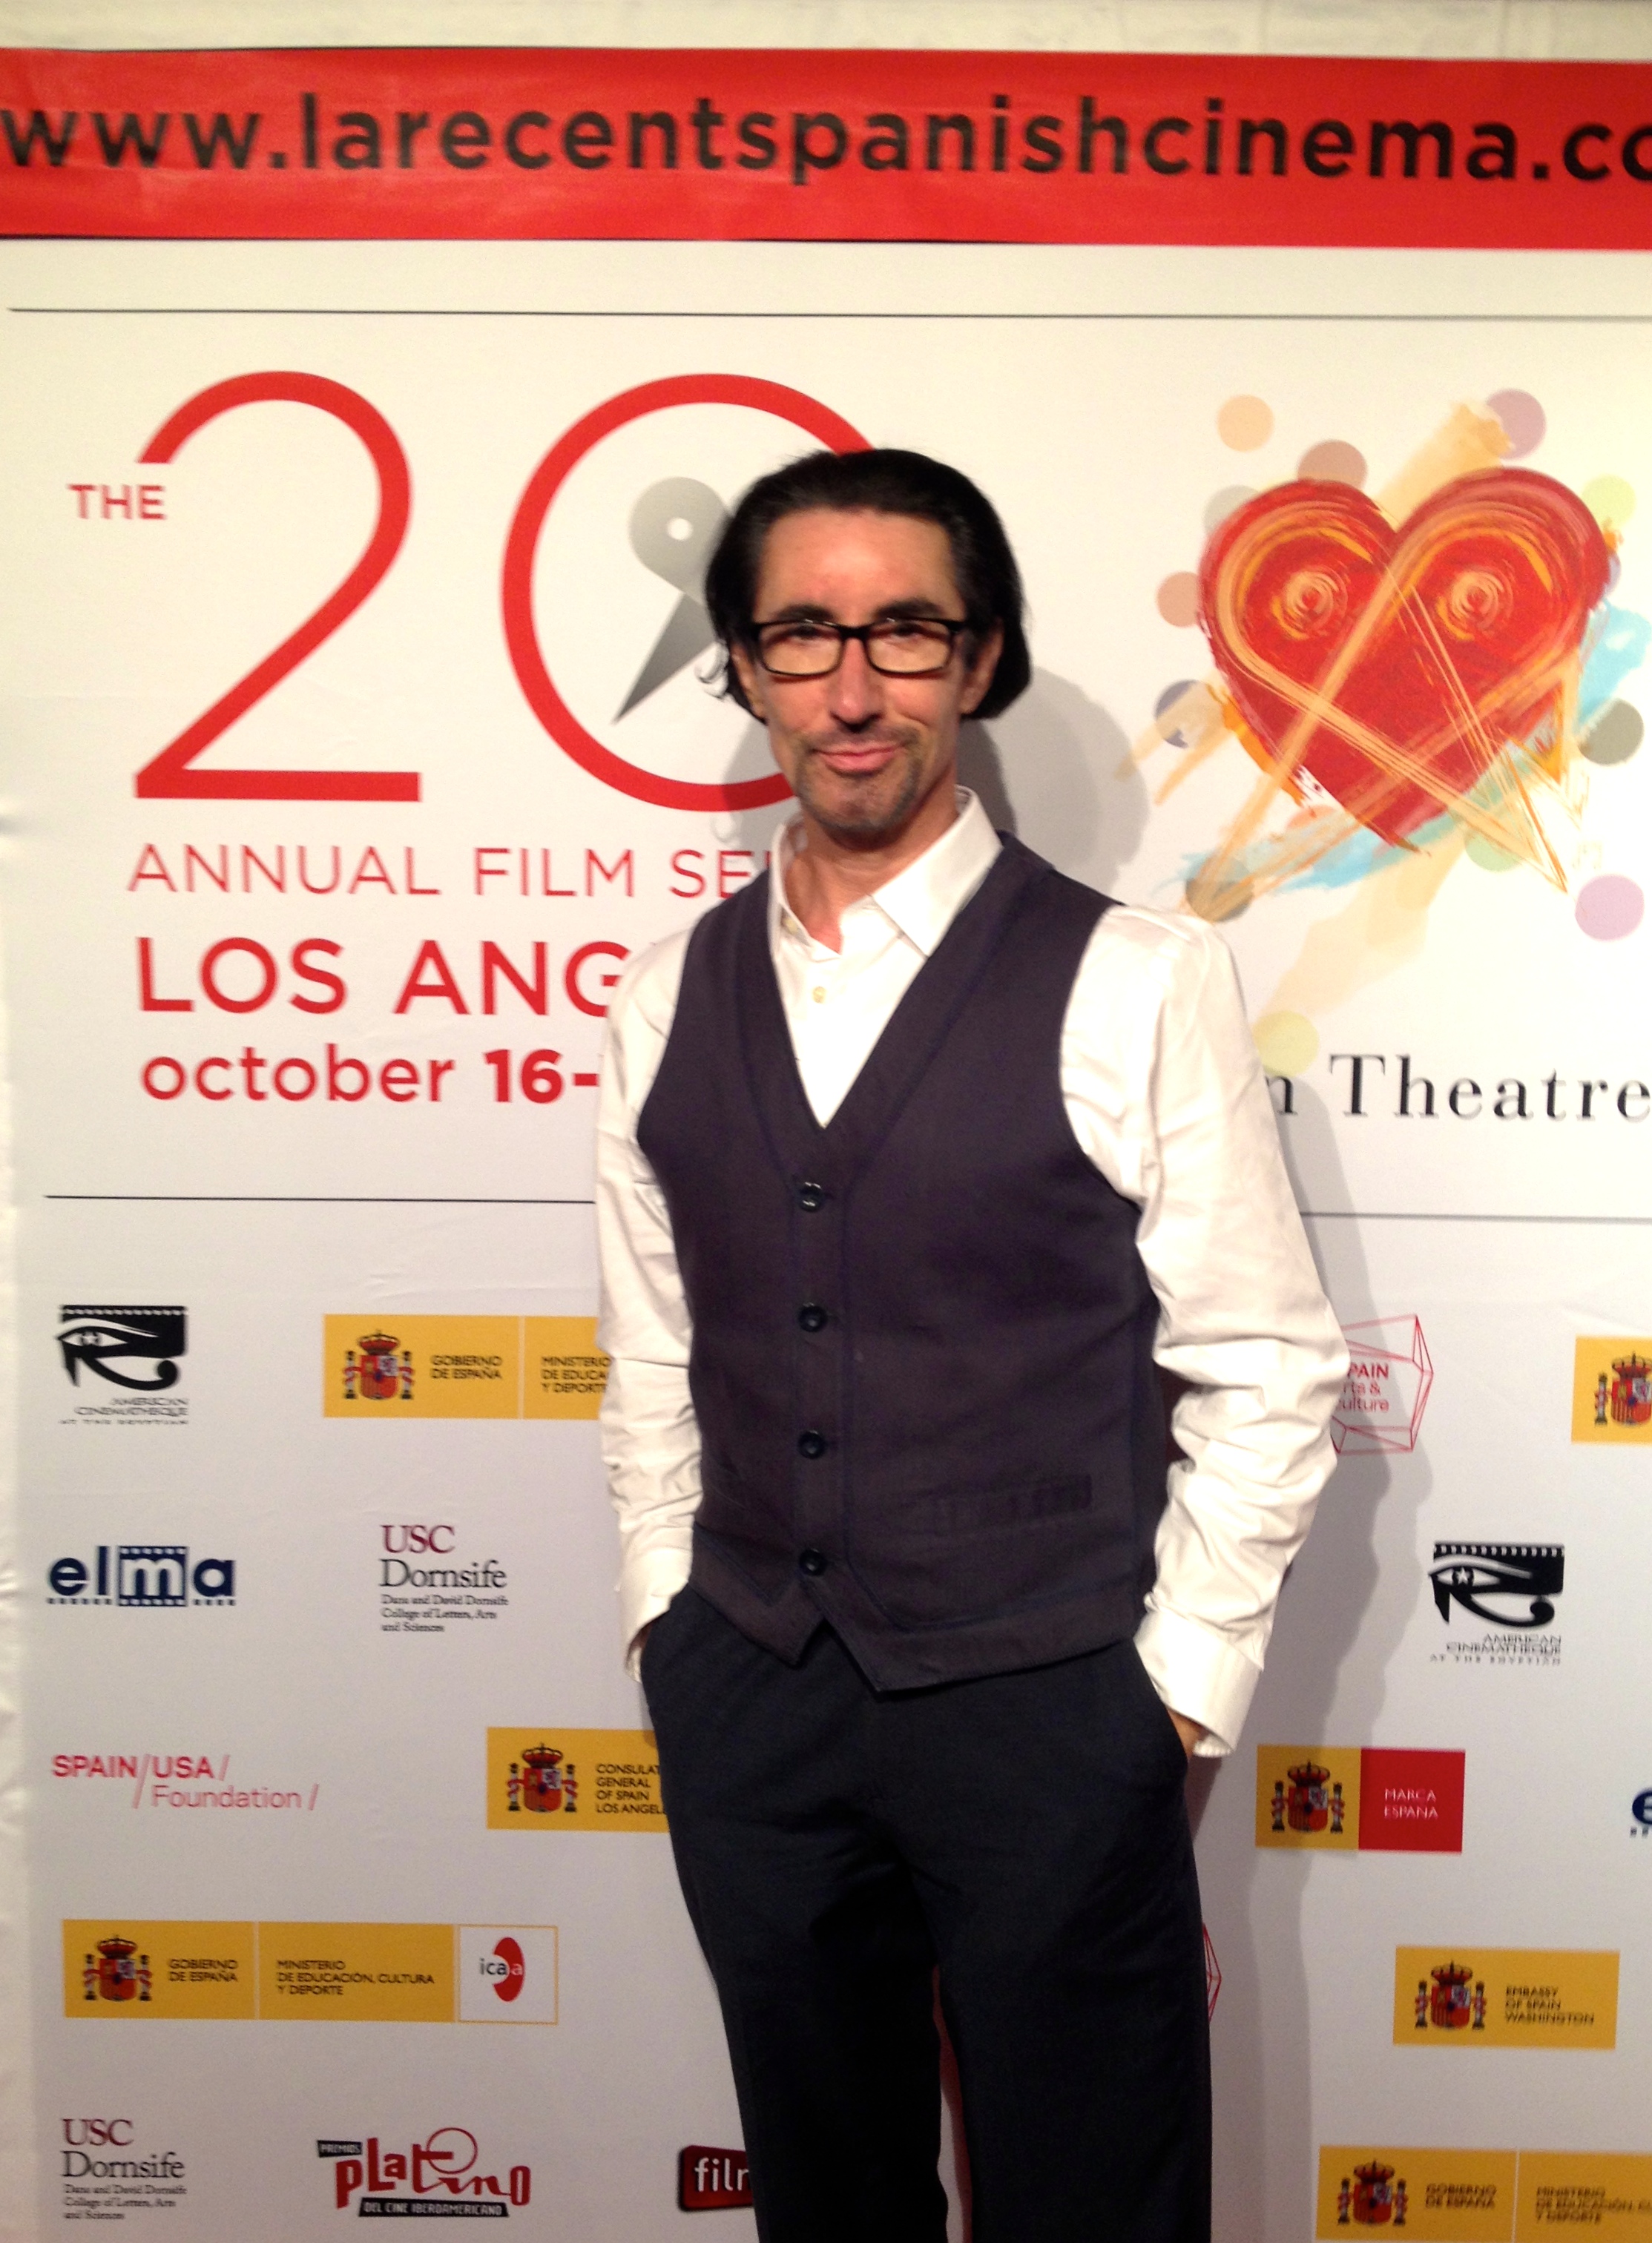 Jordi Caballero at the 20th Recent Spanish Cinema Series in Los Angeles